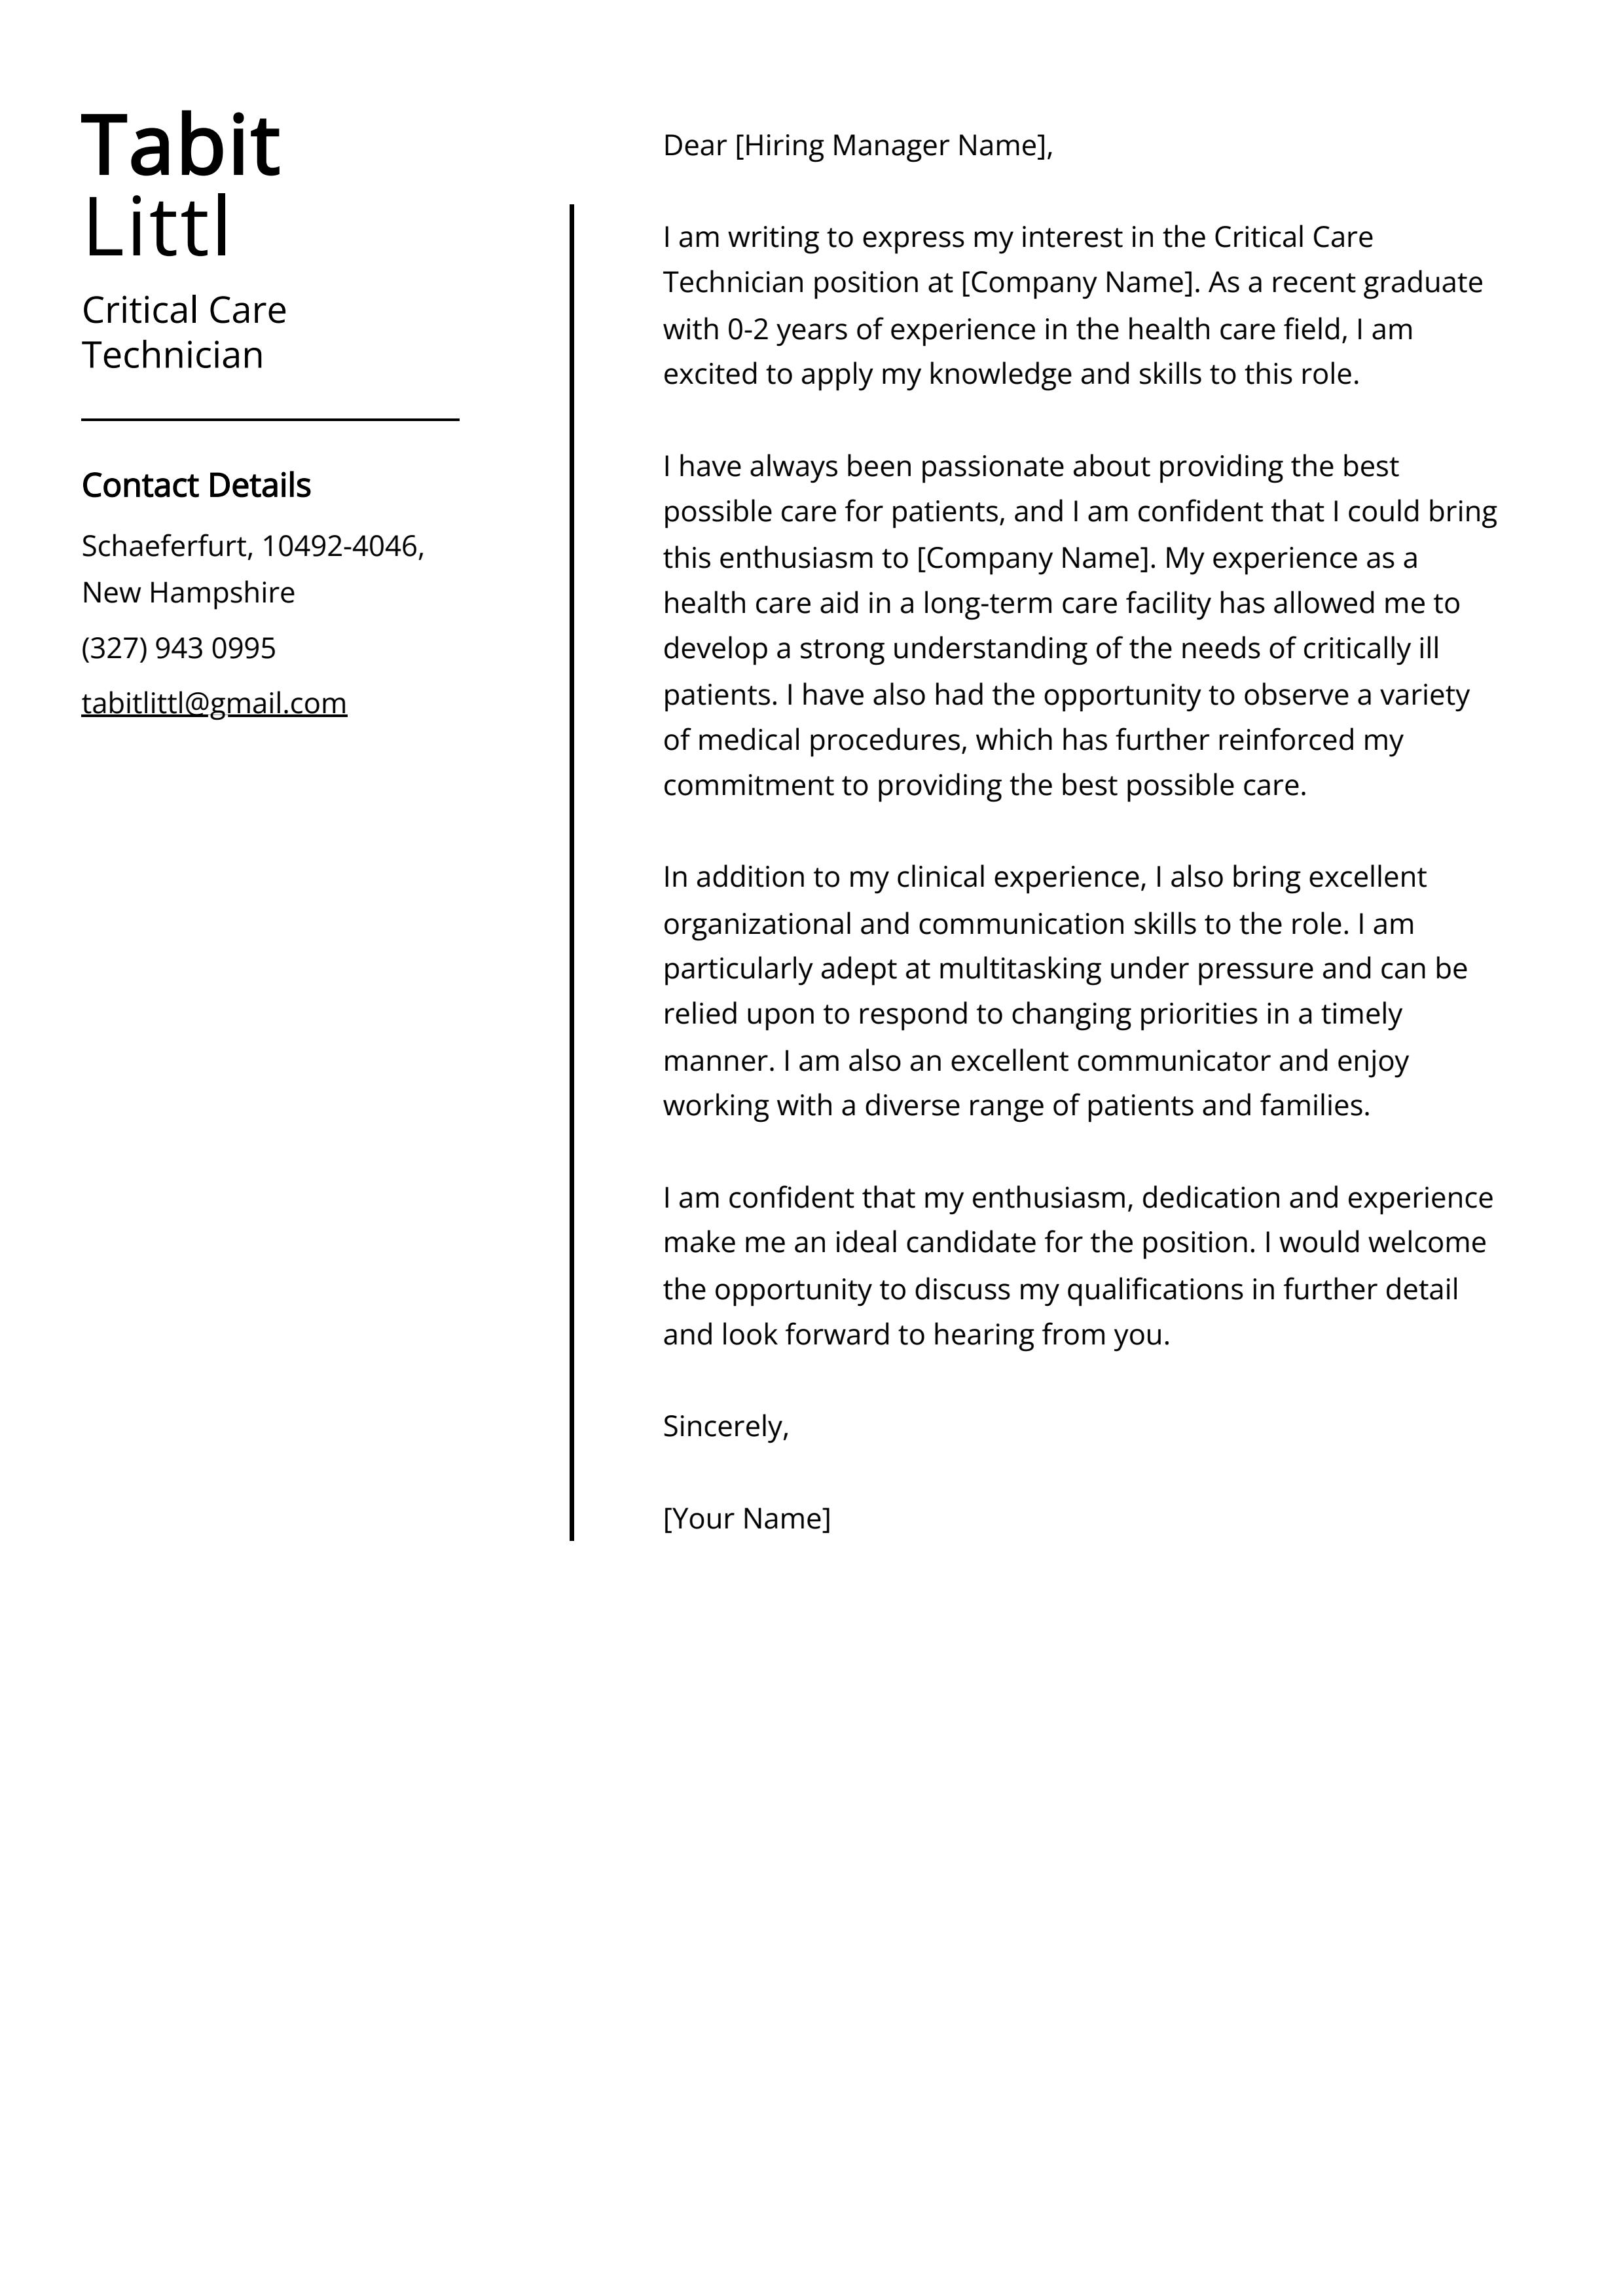 Critical Care Technician Cover Letter Example